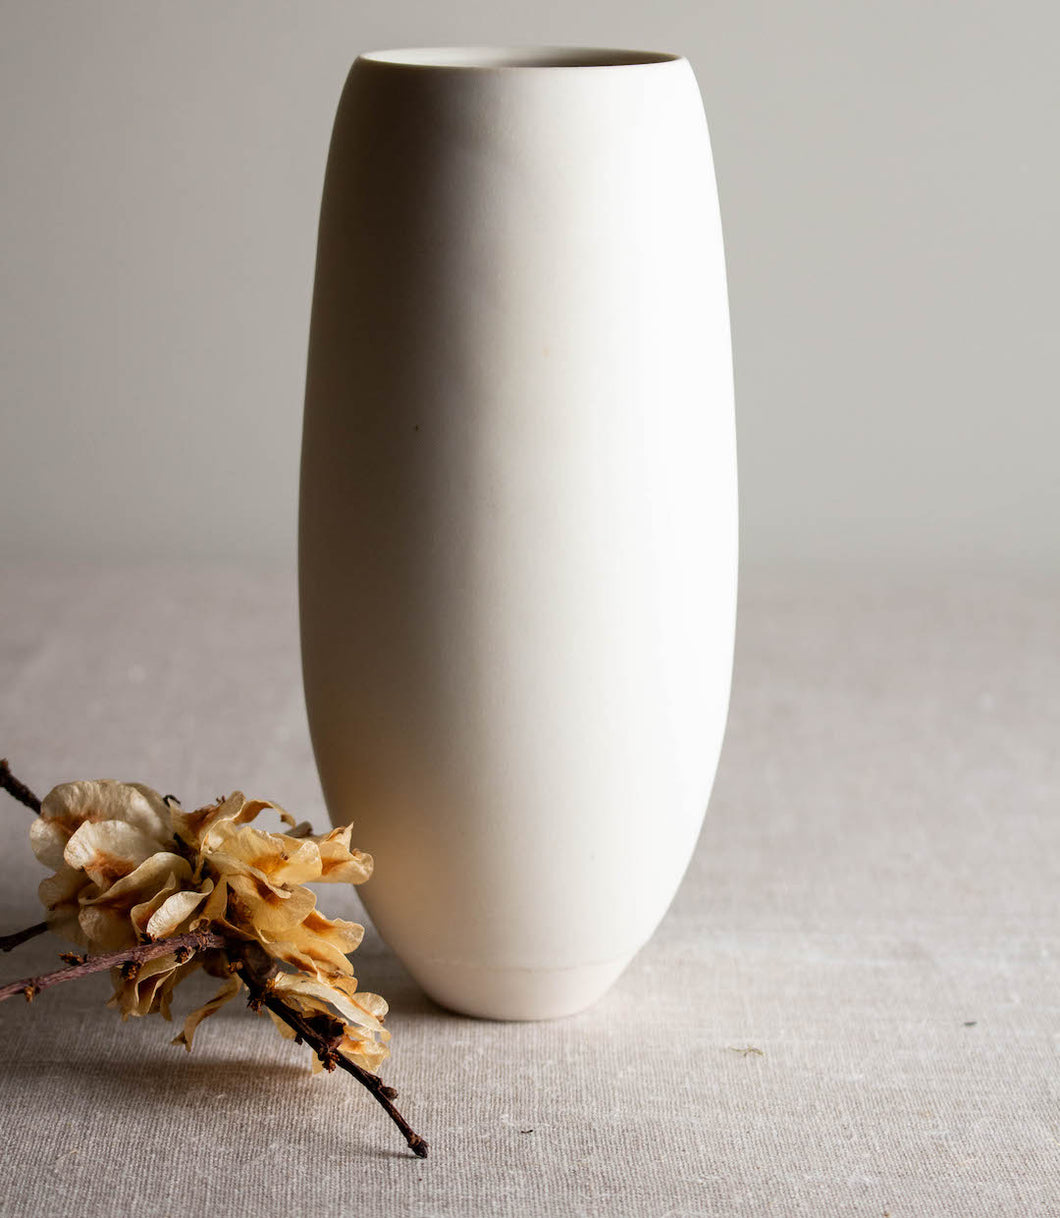 Crystalline White Matte Vase Form